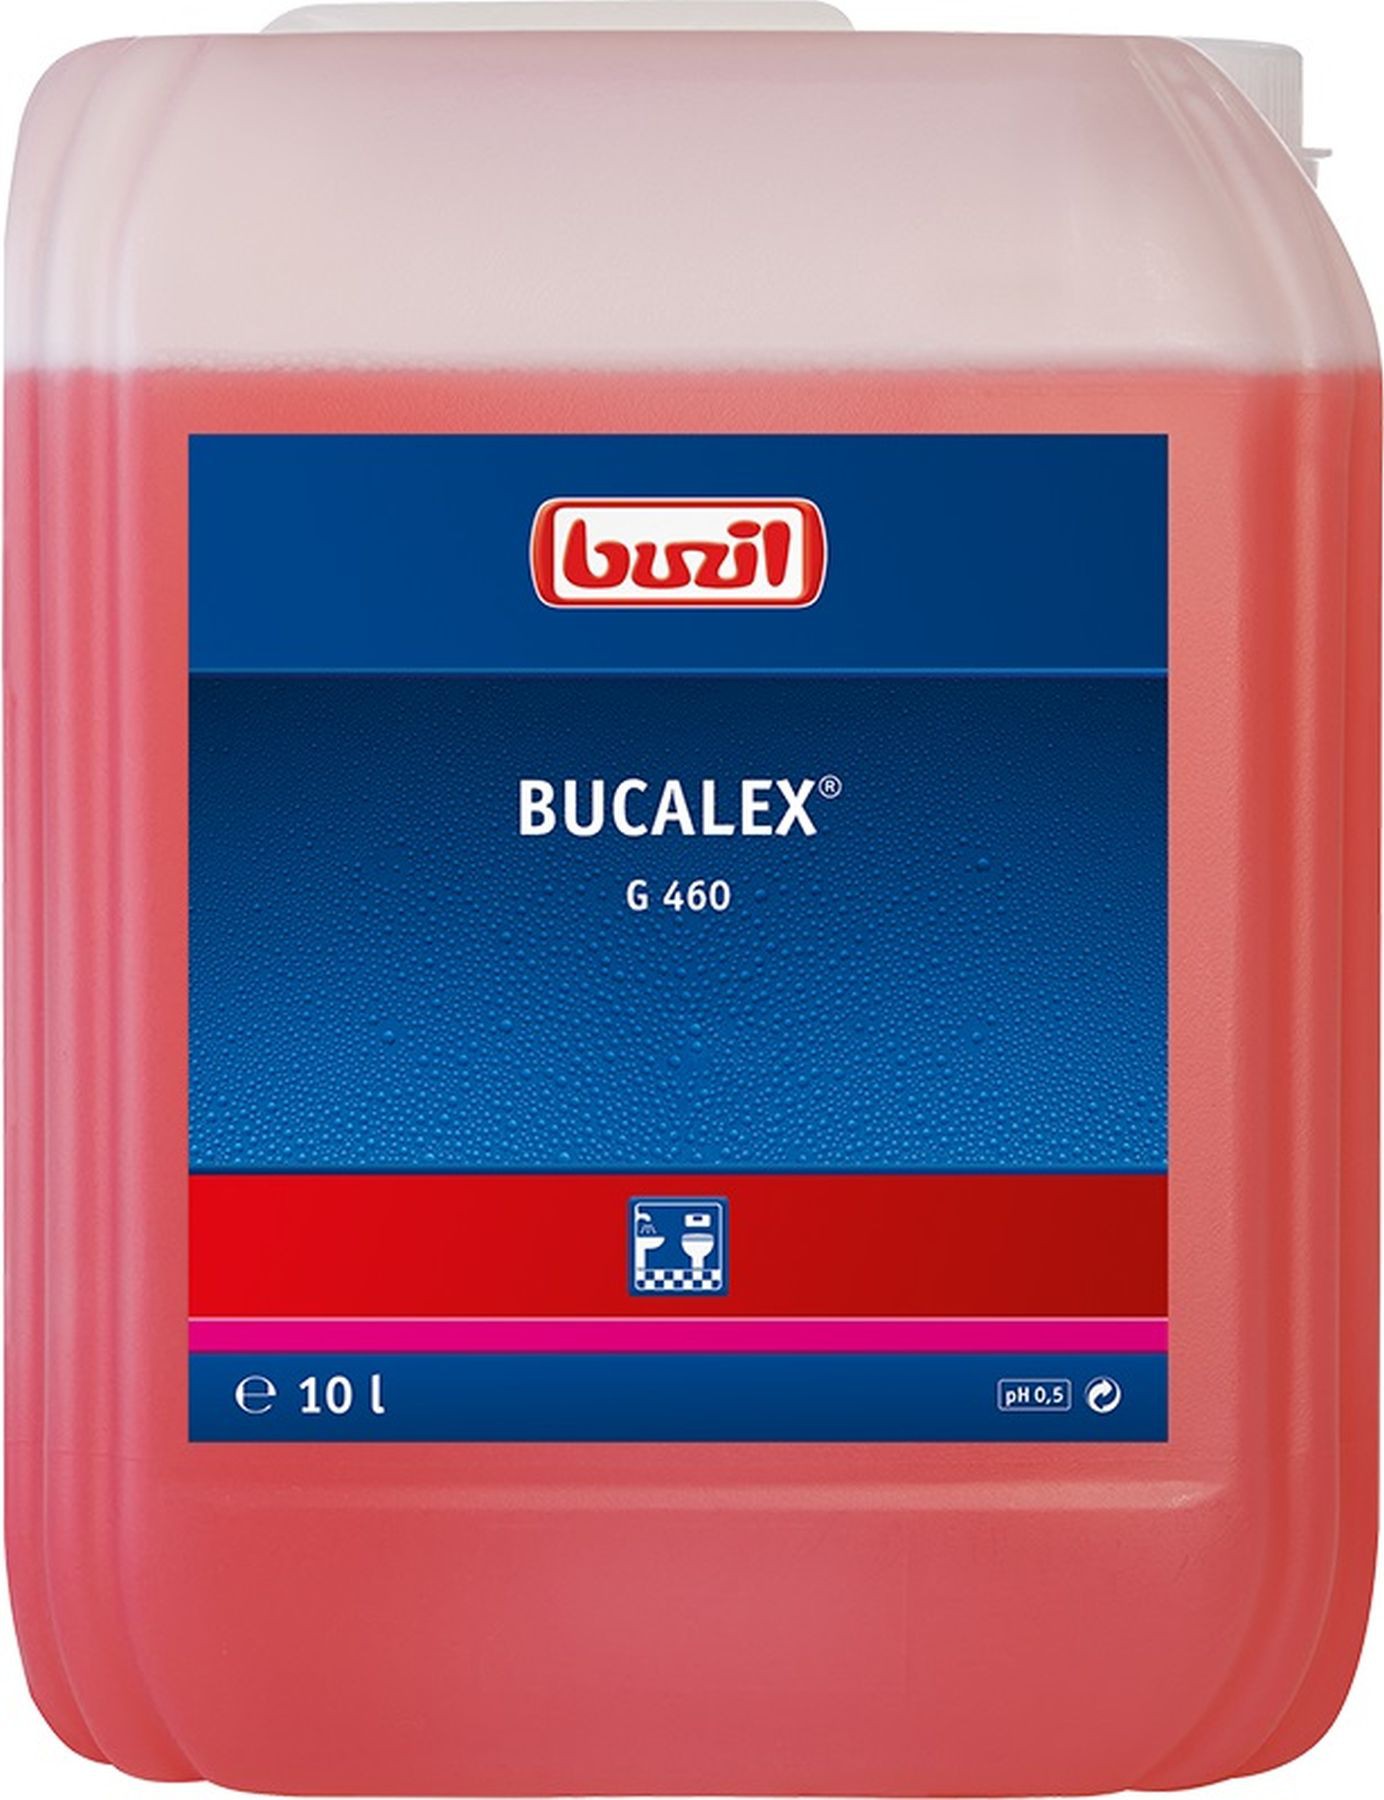 Bucalex 460 Sanitärreiniger 10 l